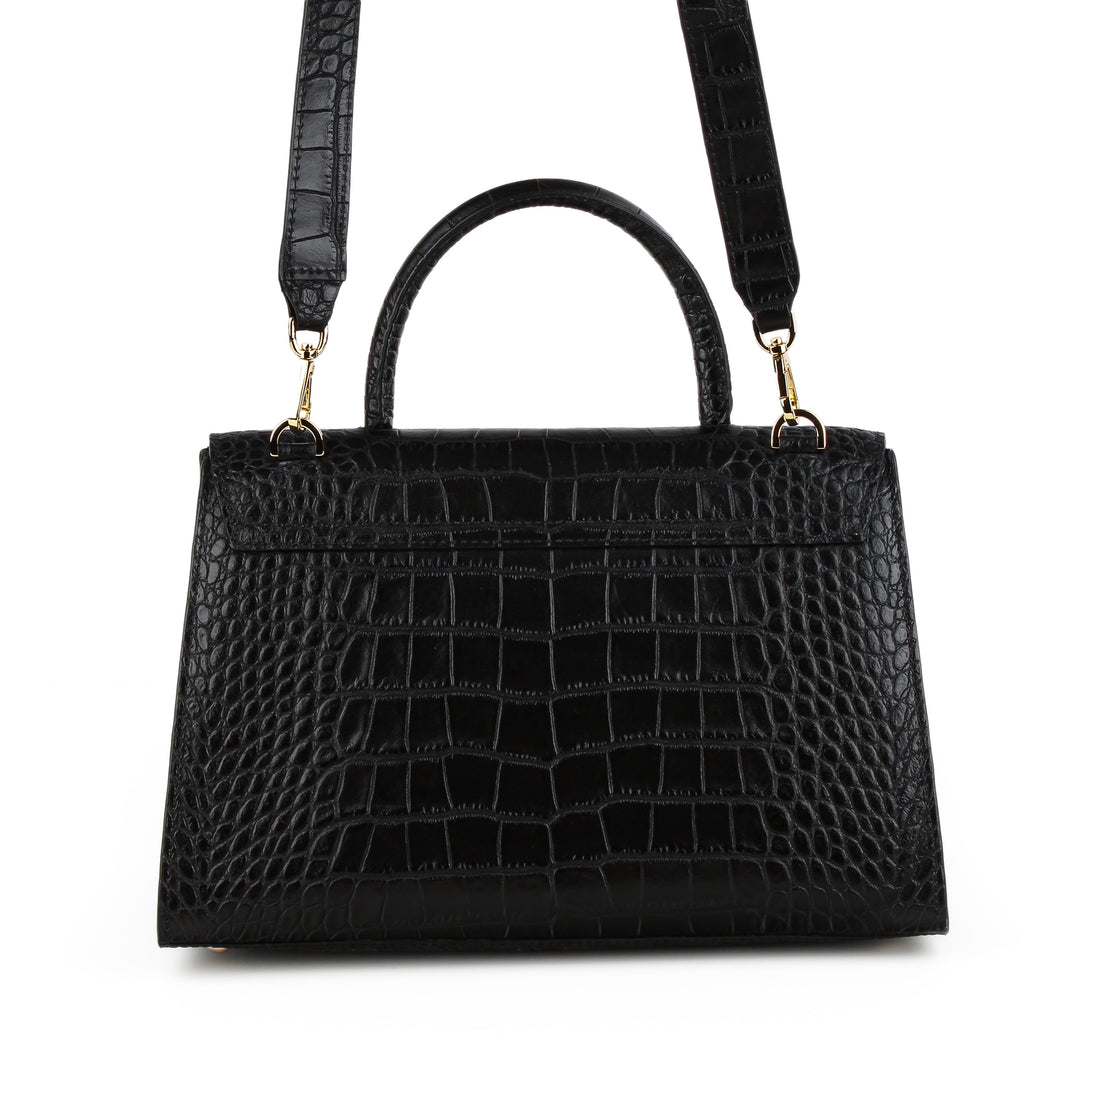 DEMELLIER The Montreal Handbag - Black Embossed Croc Leather